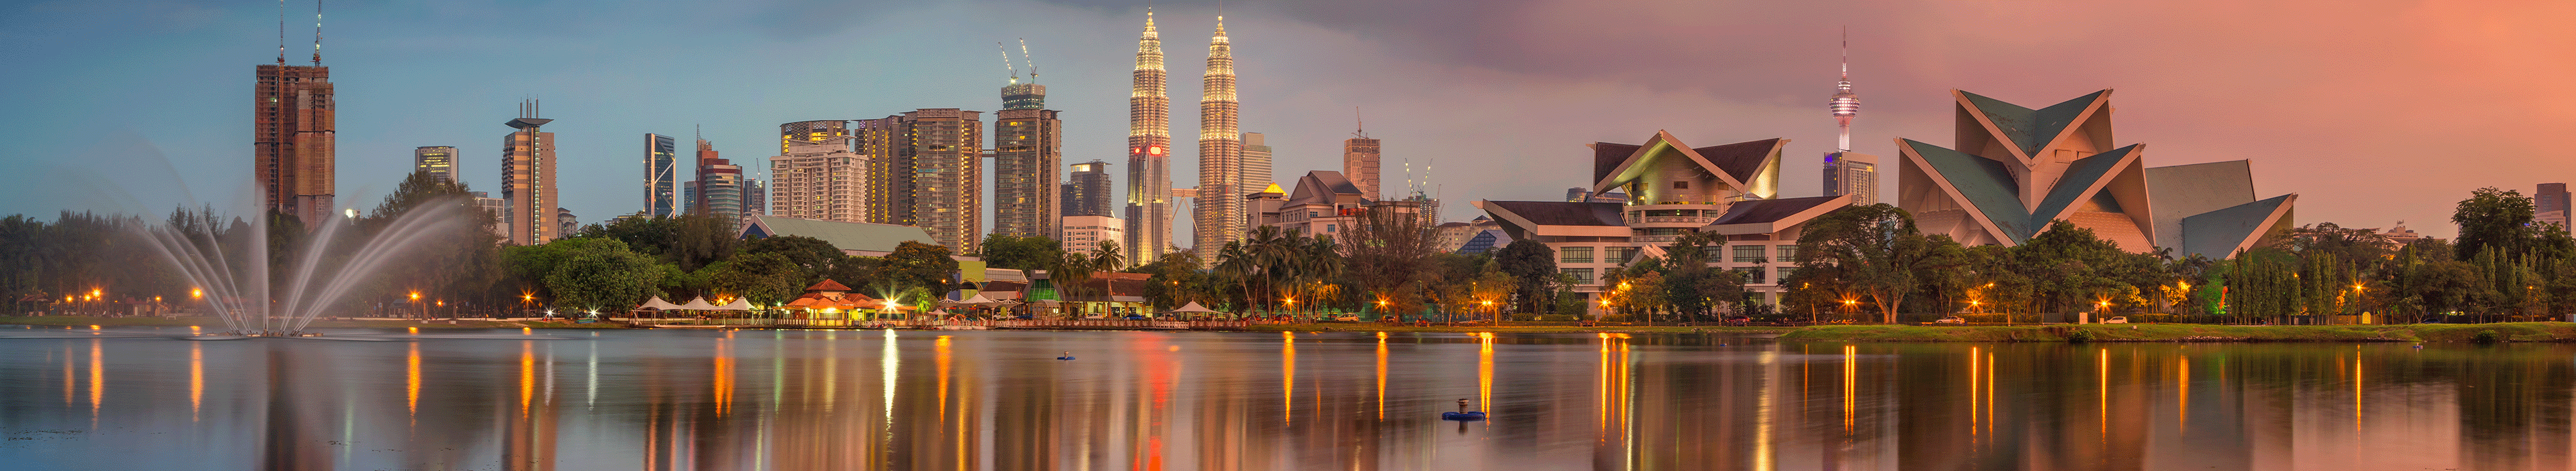 Skyline von Kuala Lumpur in Malaysia.